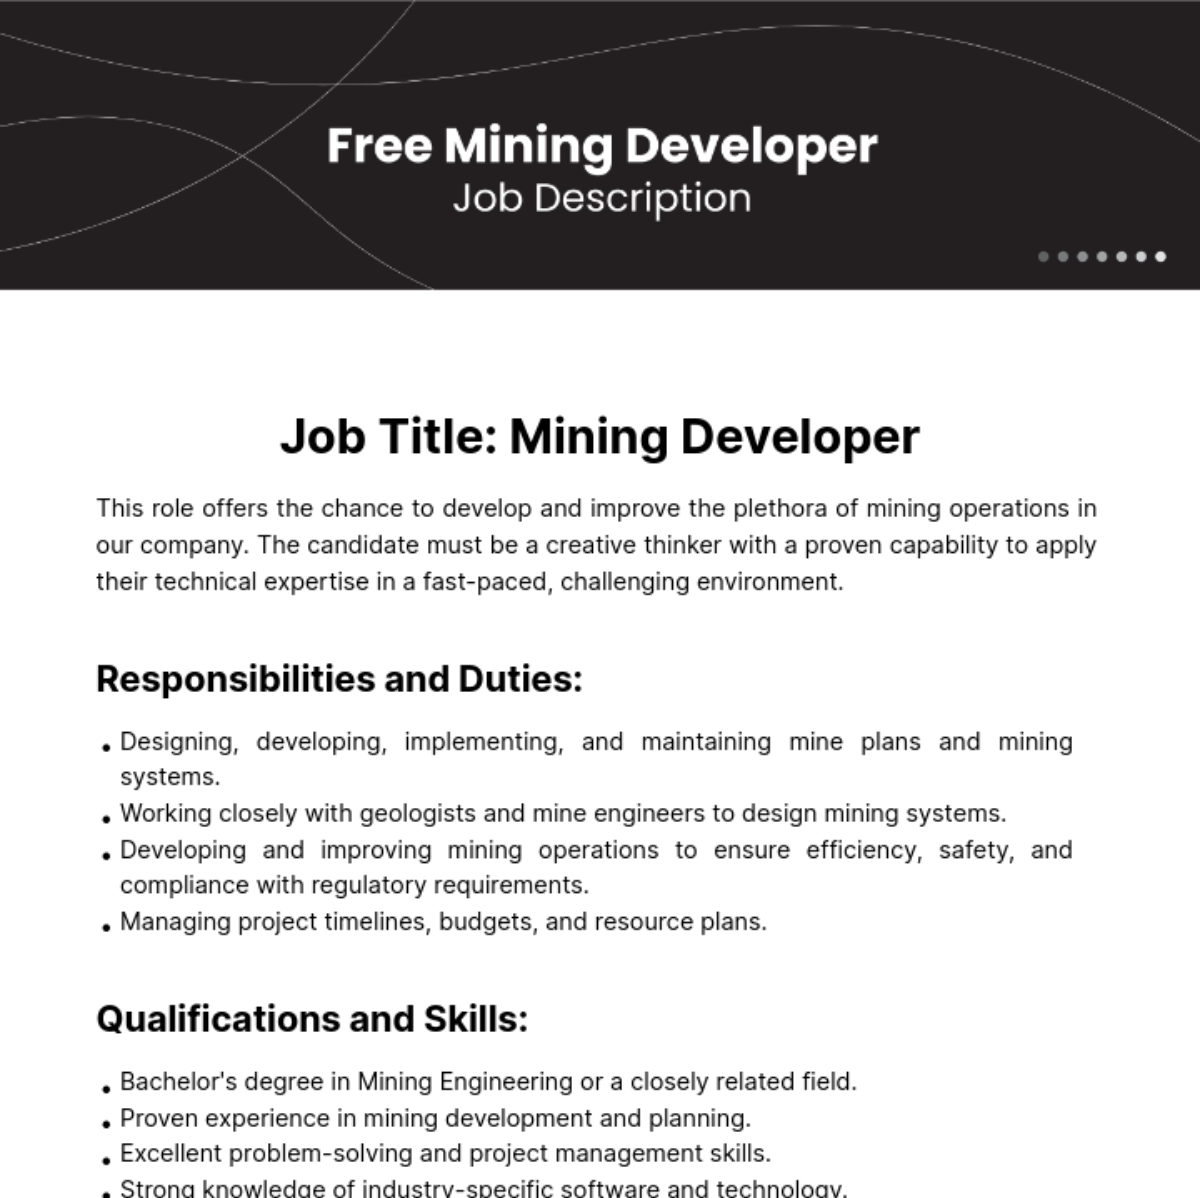 Free Mining Developer Job Description Template